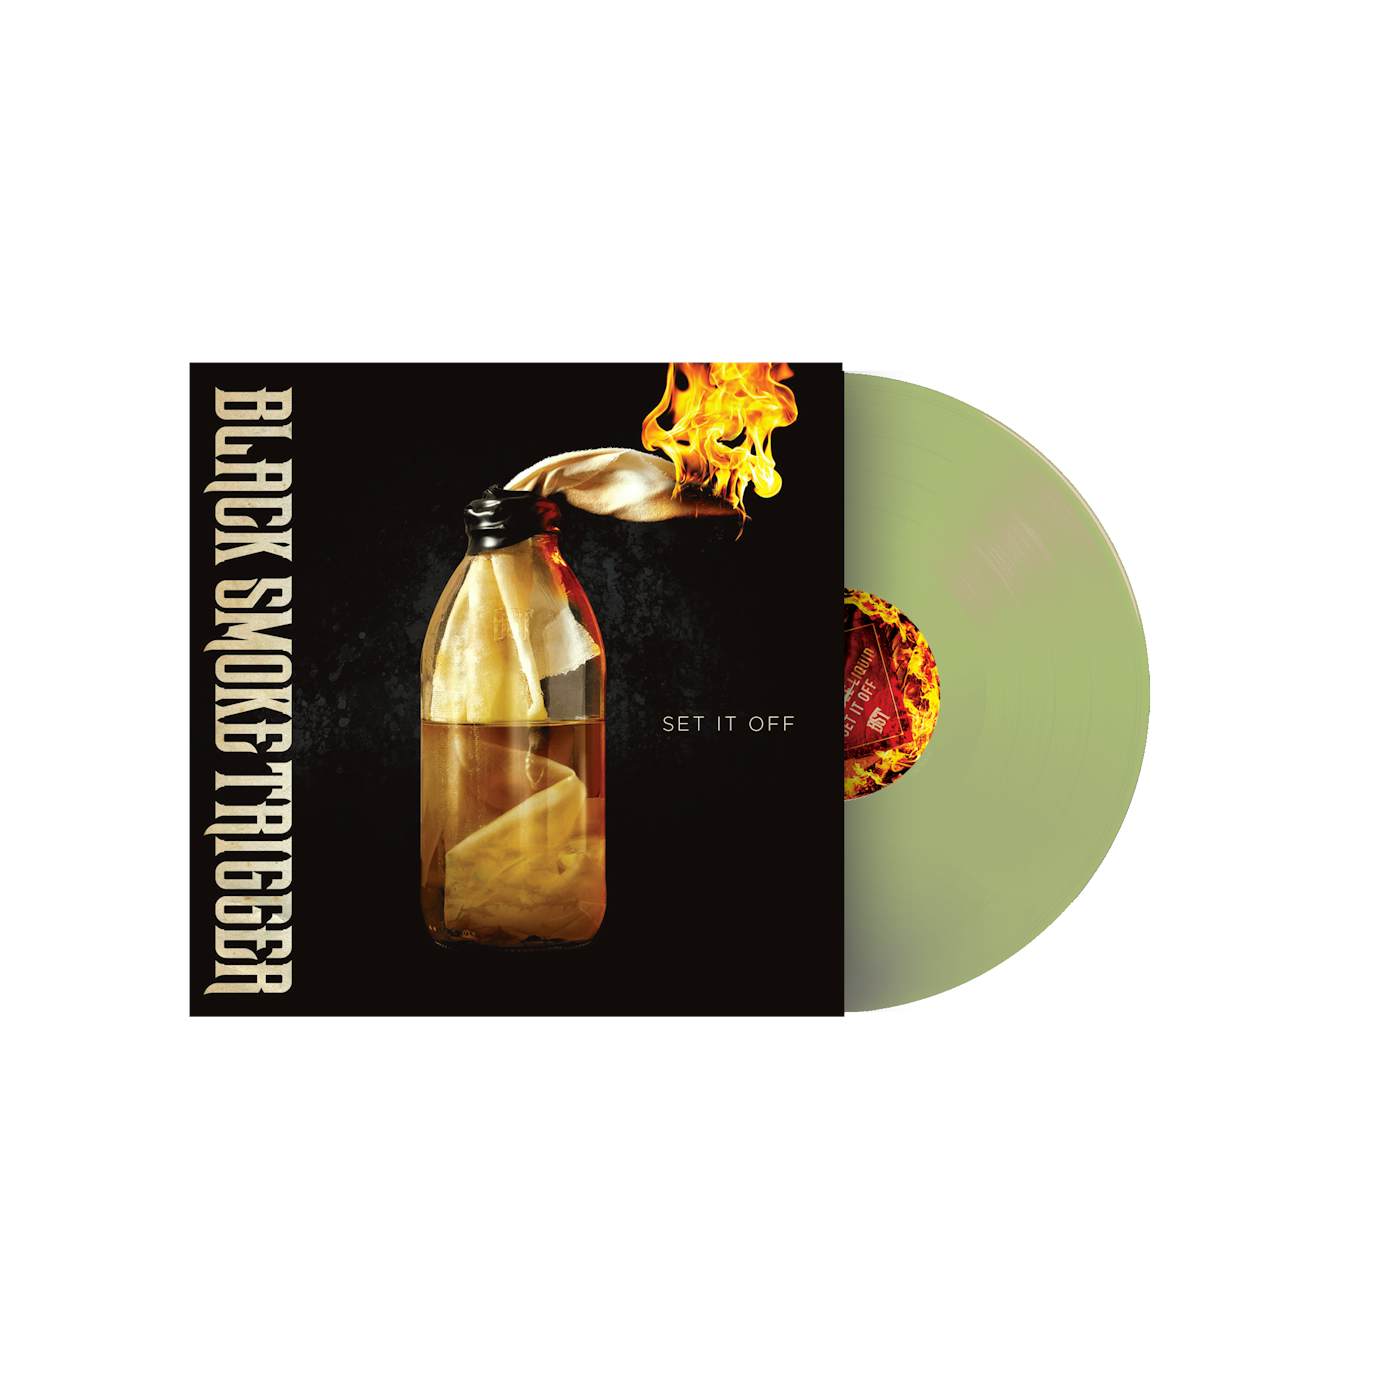 Black Smoke Trigger - 12" LP Vinyl - LIMITED EDITION